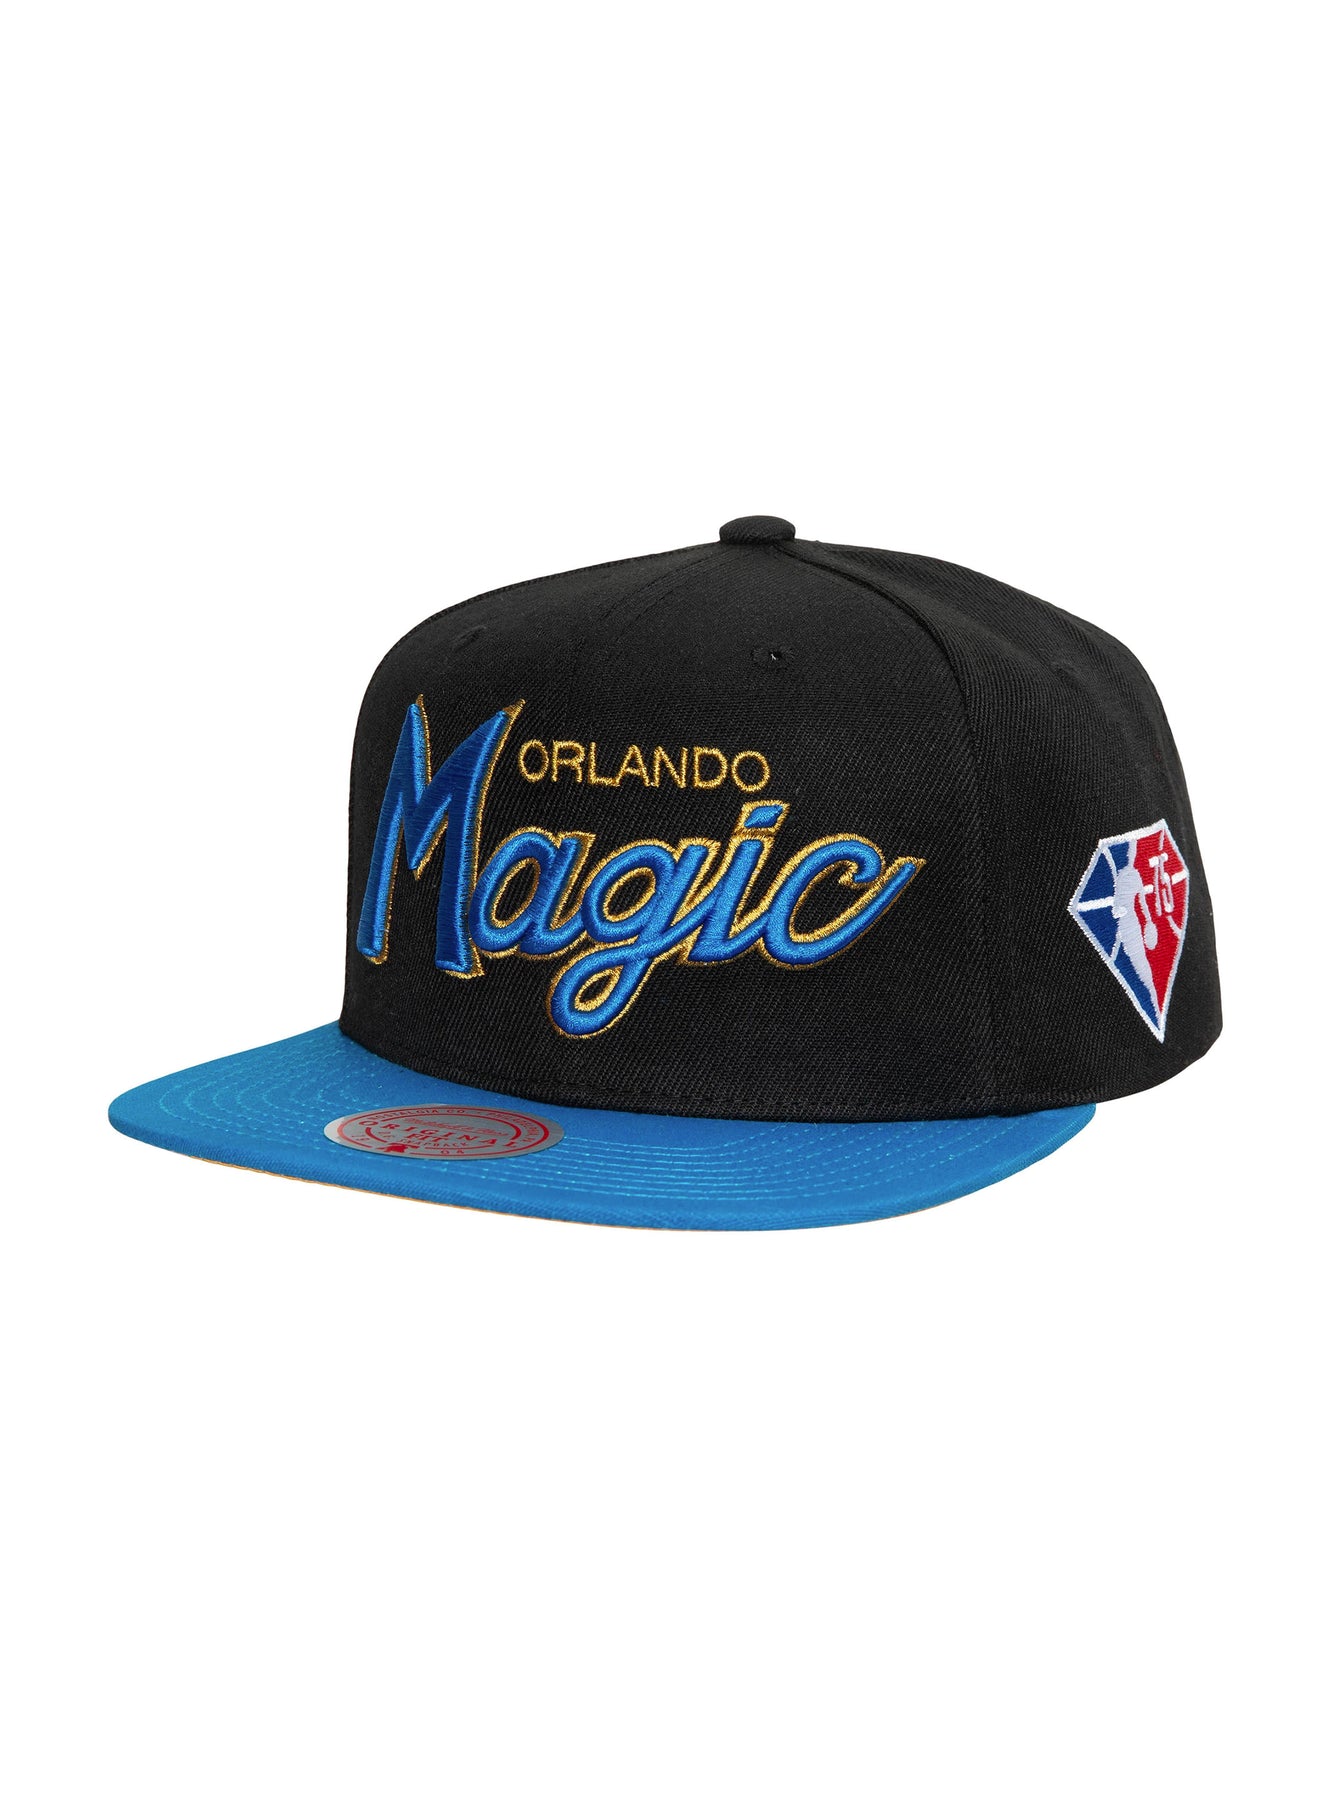 Orlando Magic Hats